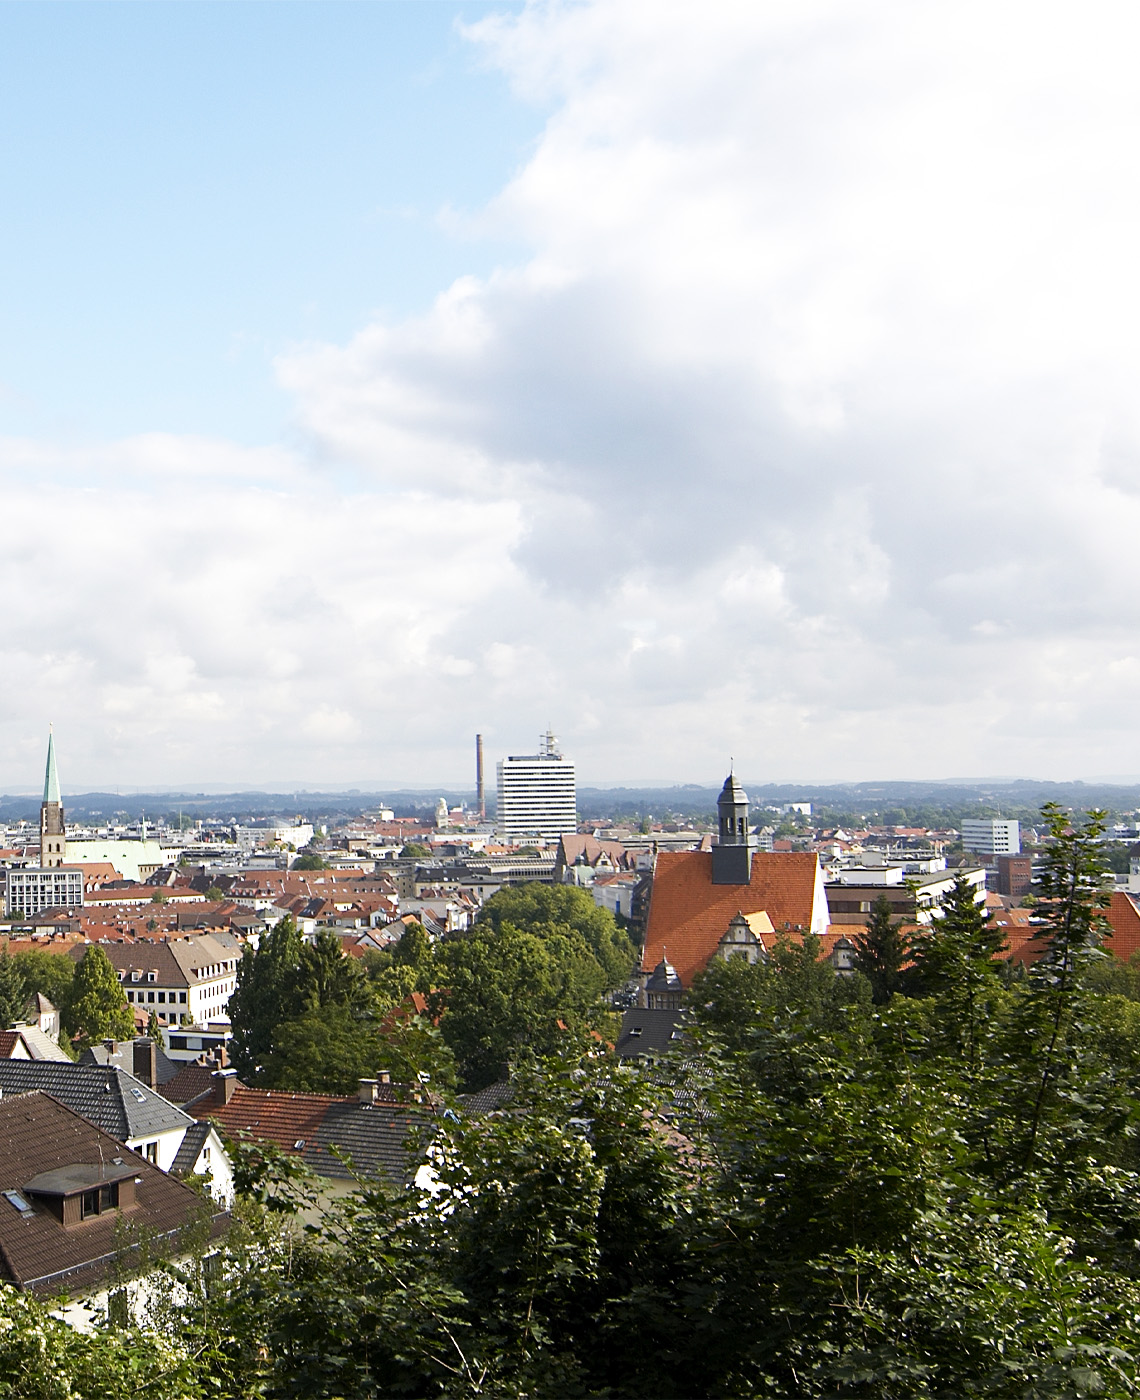 Aerial view of Halle/Westfalen